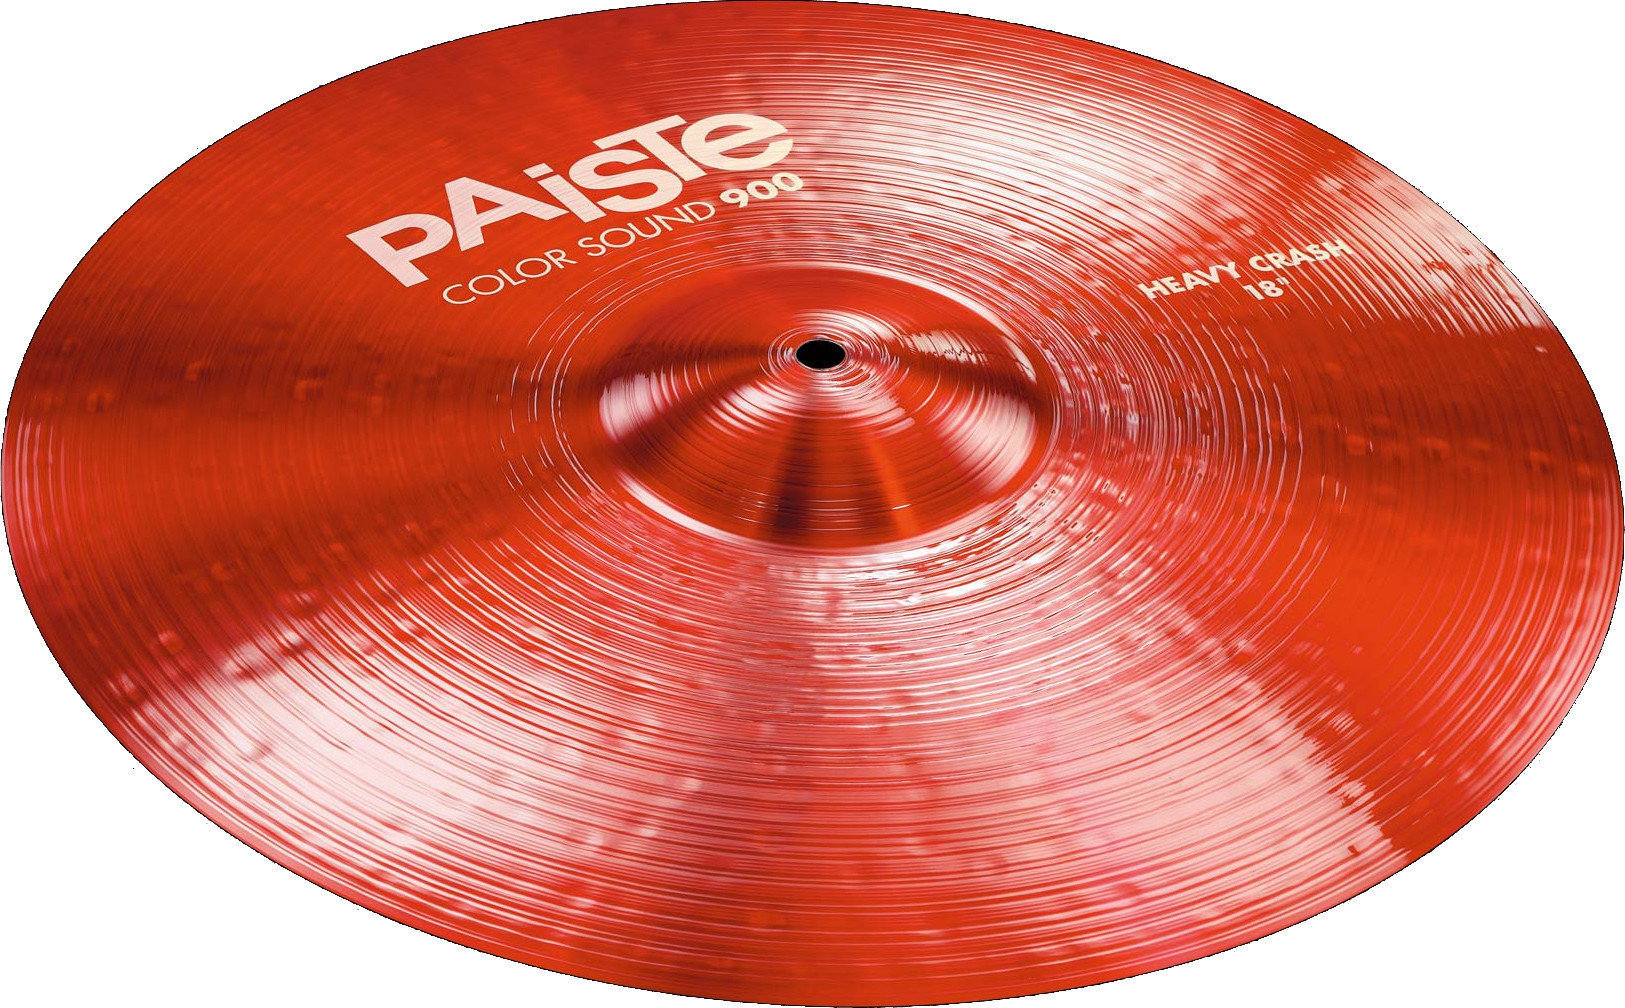 Cymbale crash Paiste Color Sound 900  Heavy Cymbale crash 17" Rouge